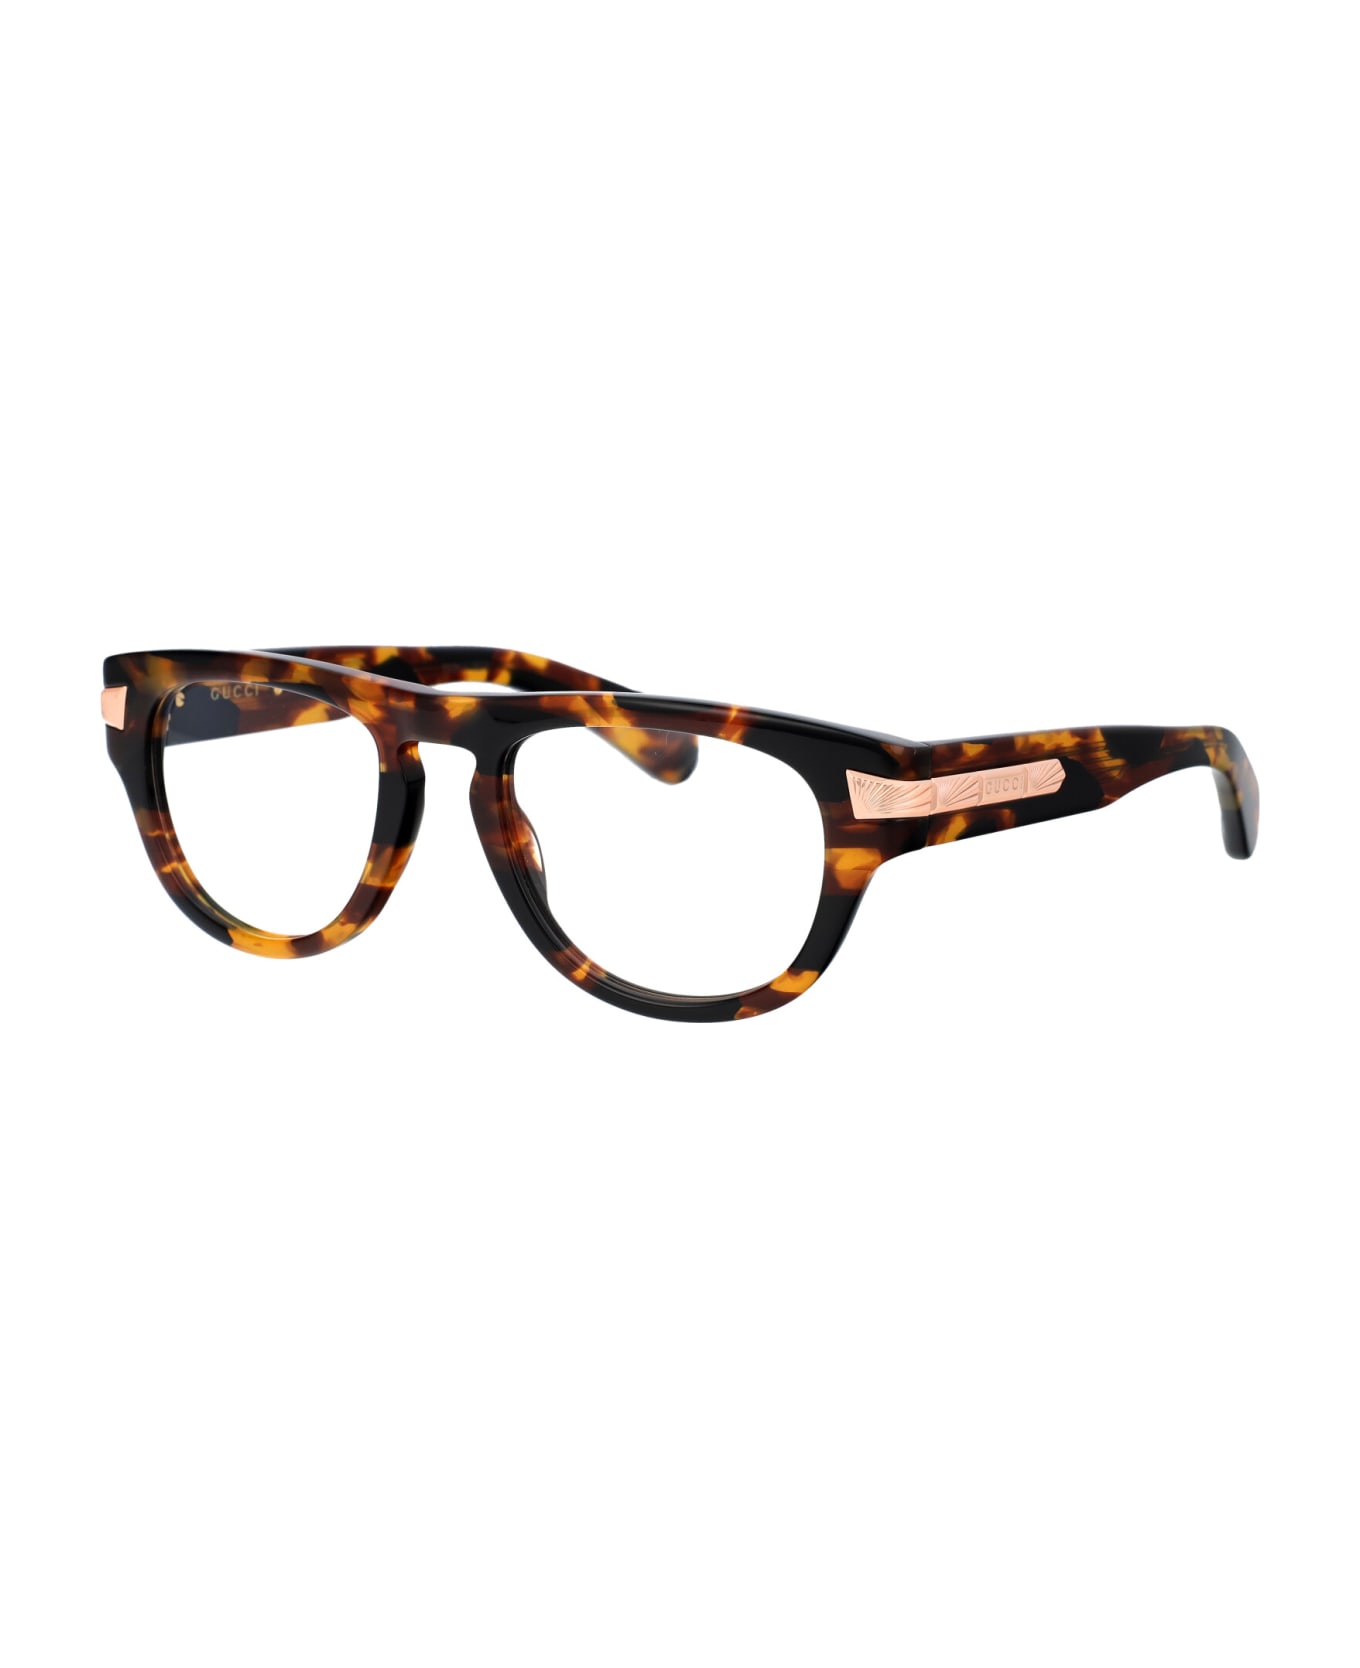 Gucci Eyewear Gg1519o Glasses - 002 HAVANA HAVANA TRANSPARENT